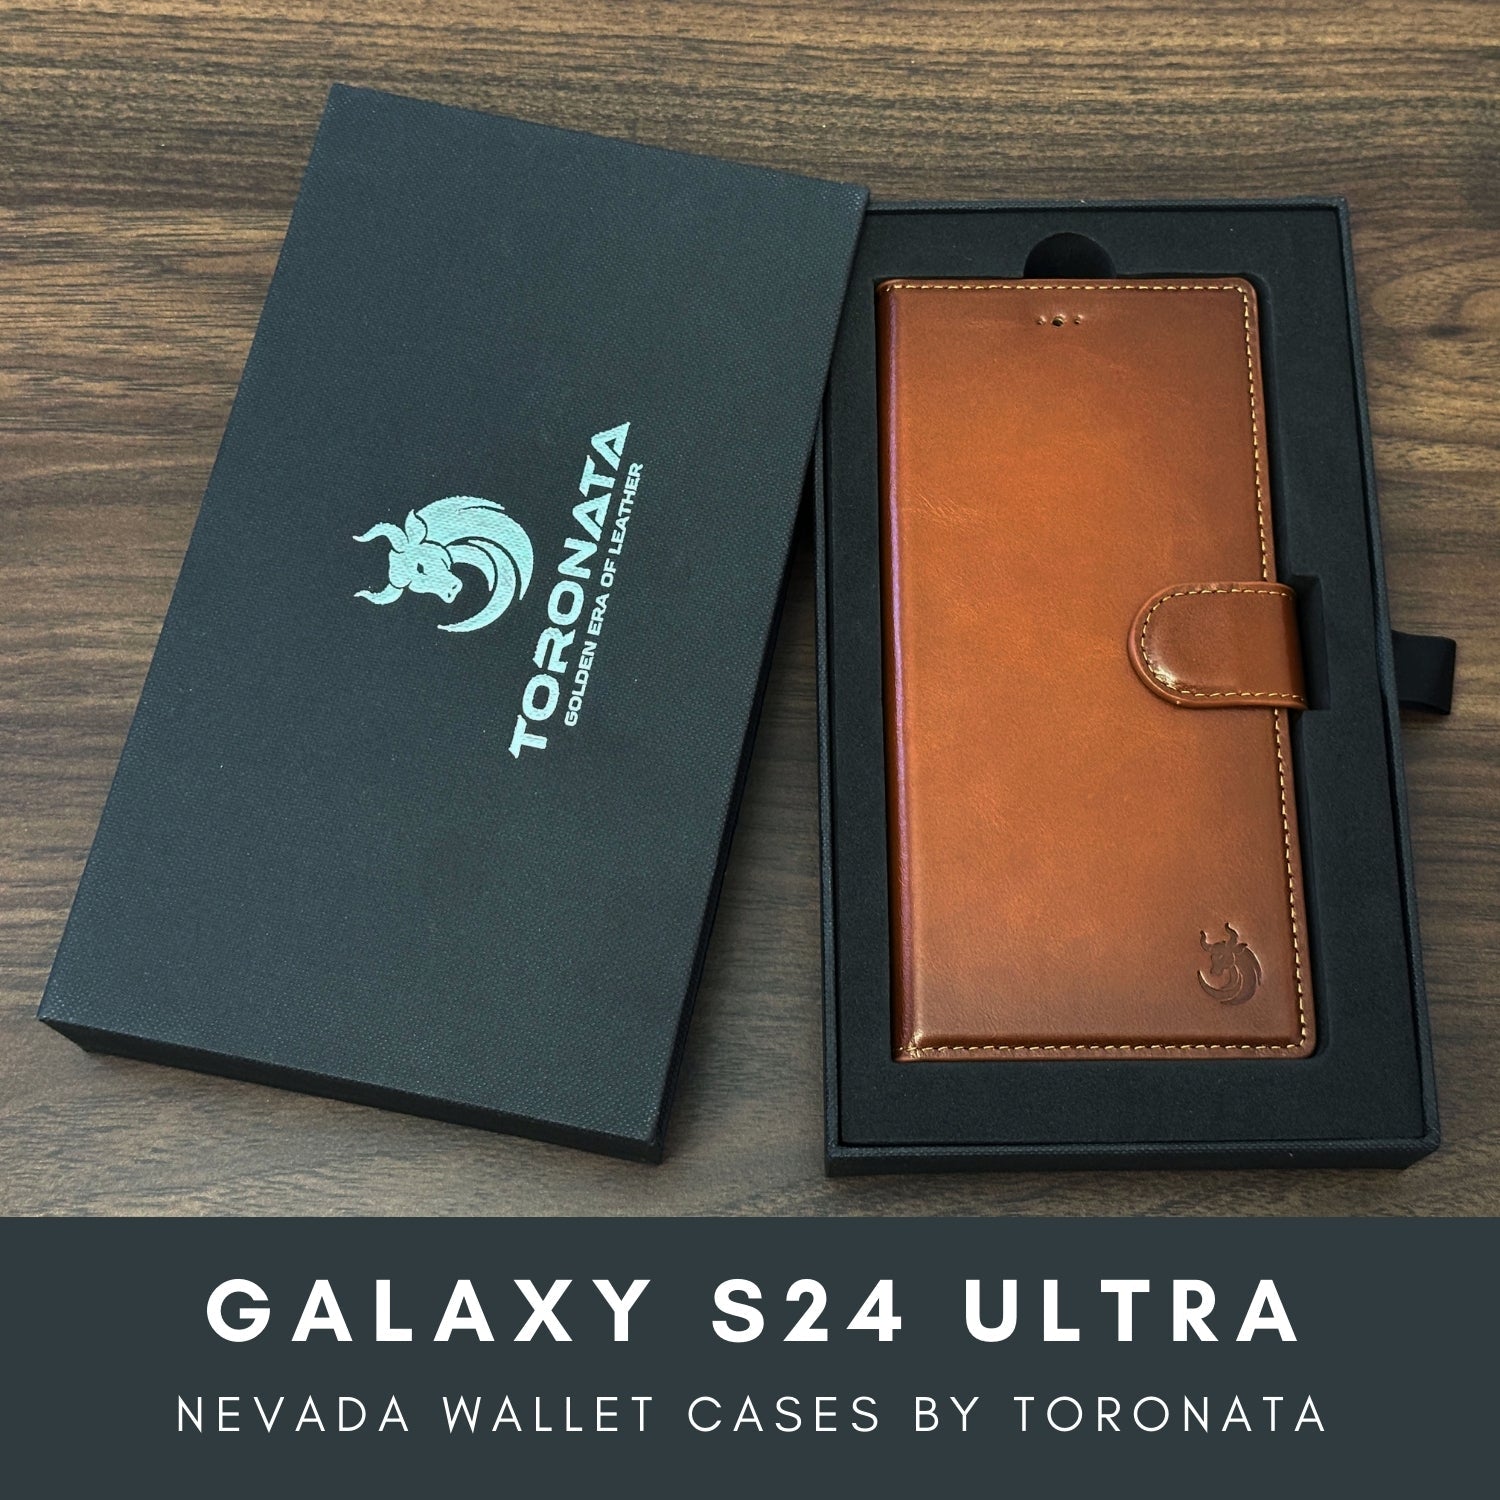 New Nevada Samsung Galaxy S24 Ultra Wallet Cases by TORONATA - TORONATA